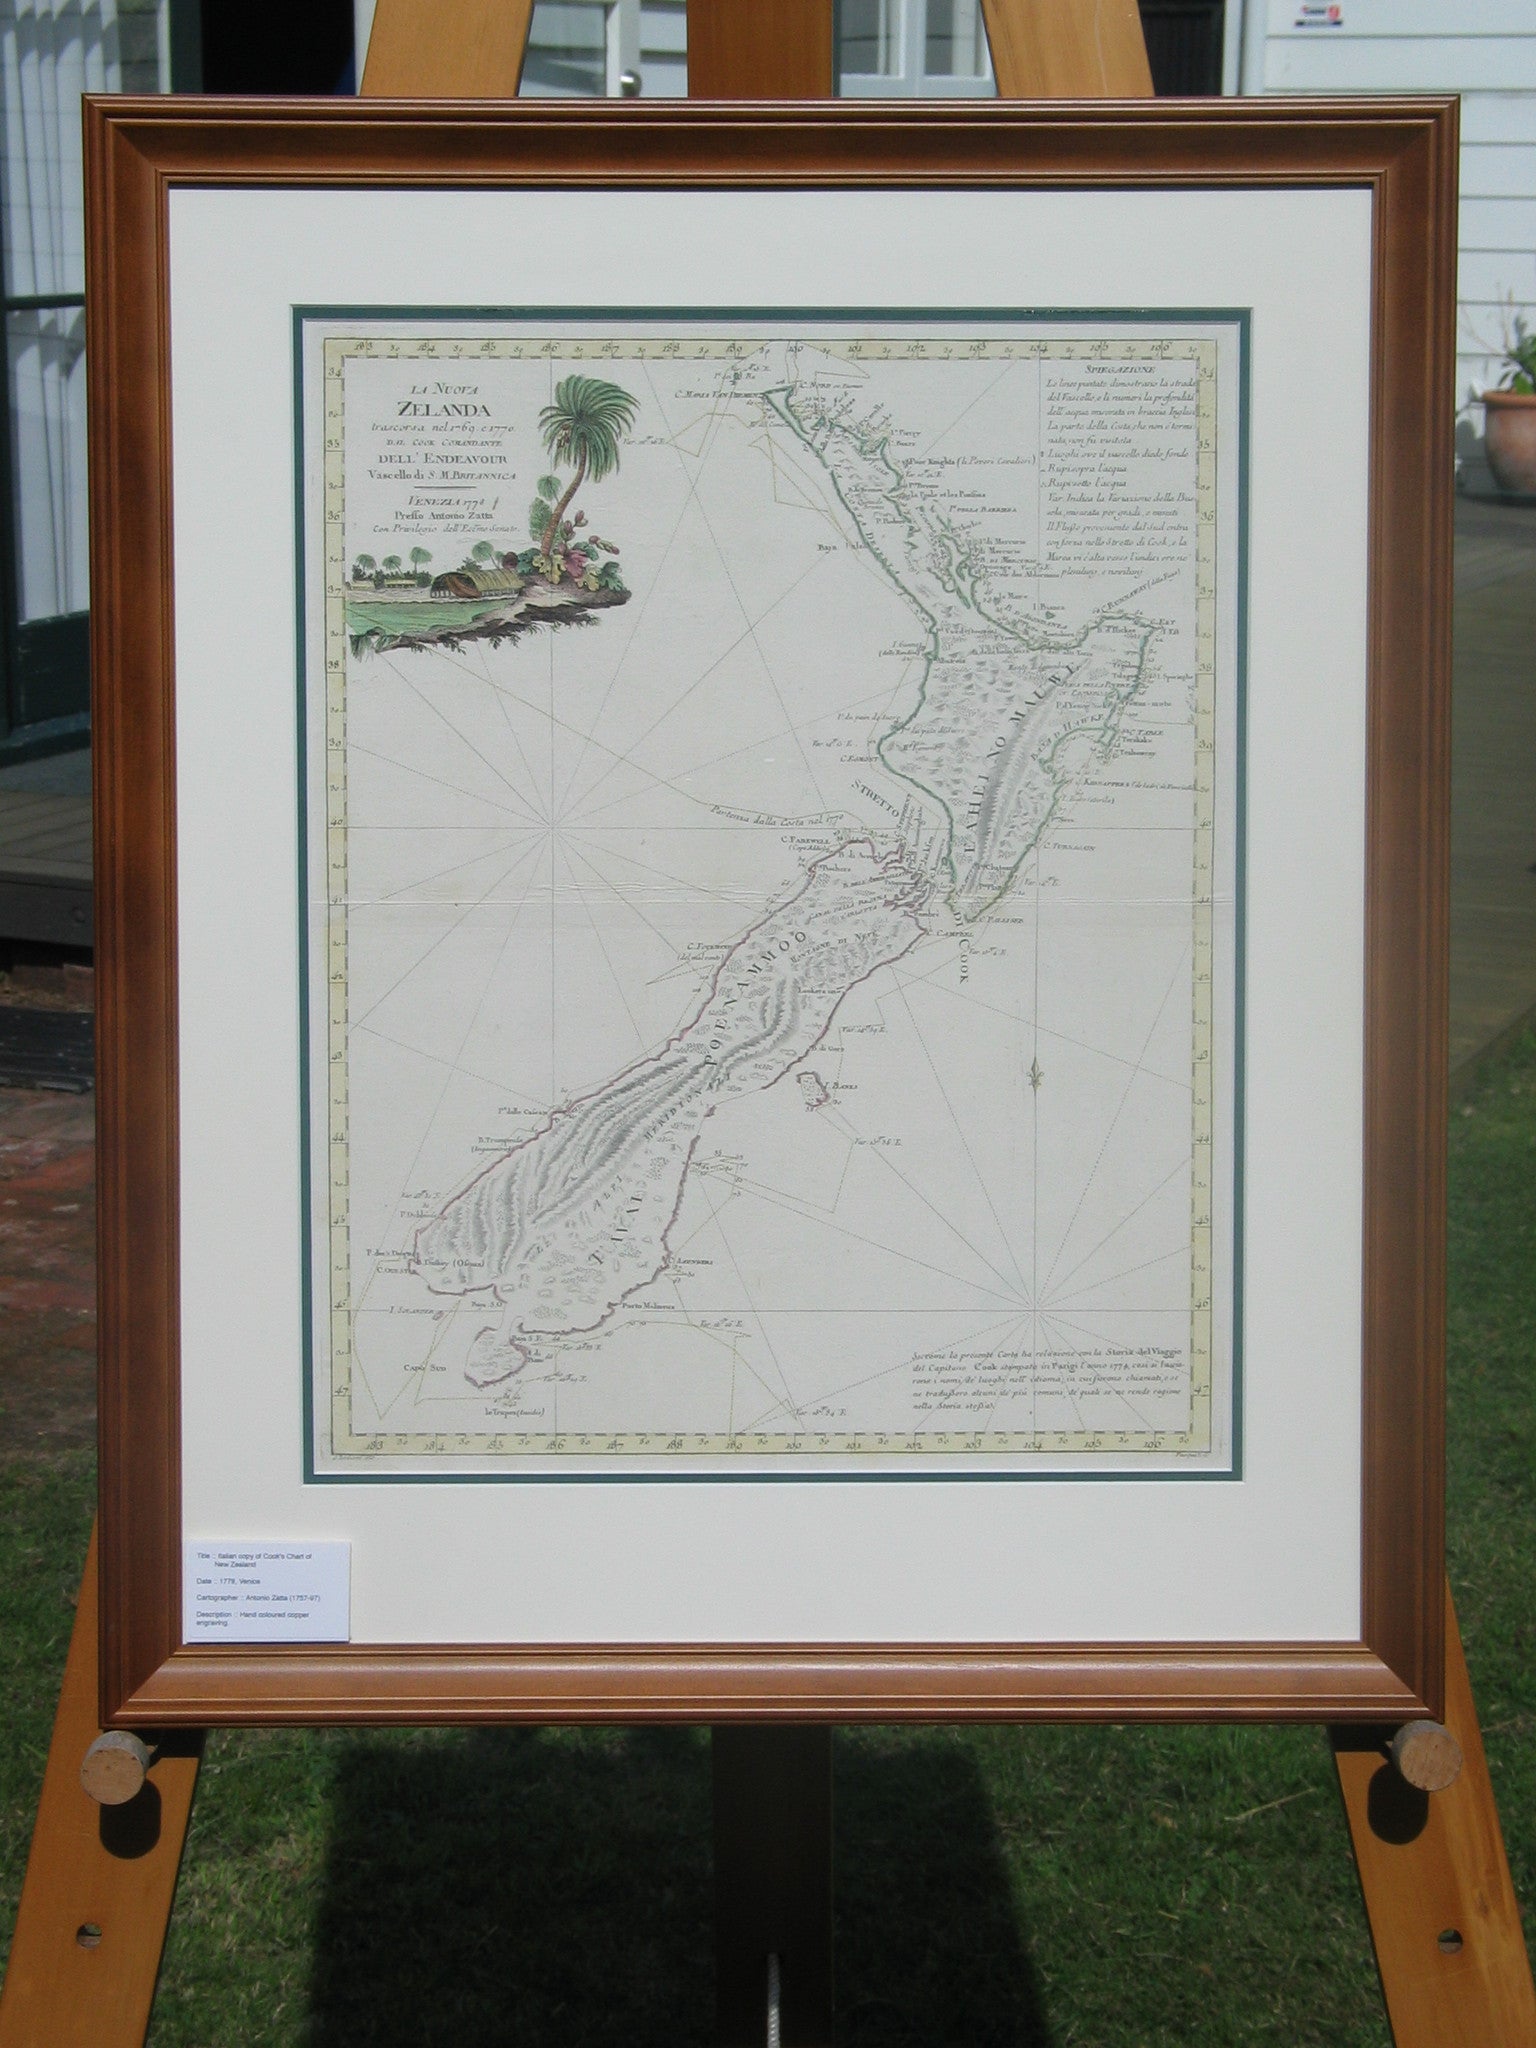 Map of New Zealand by Antonio Zatta